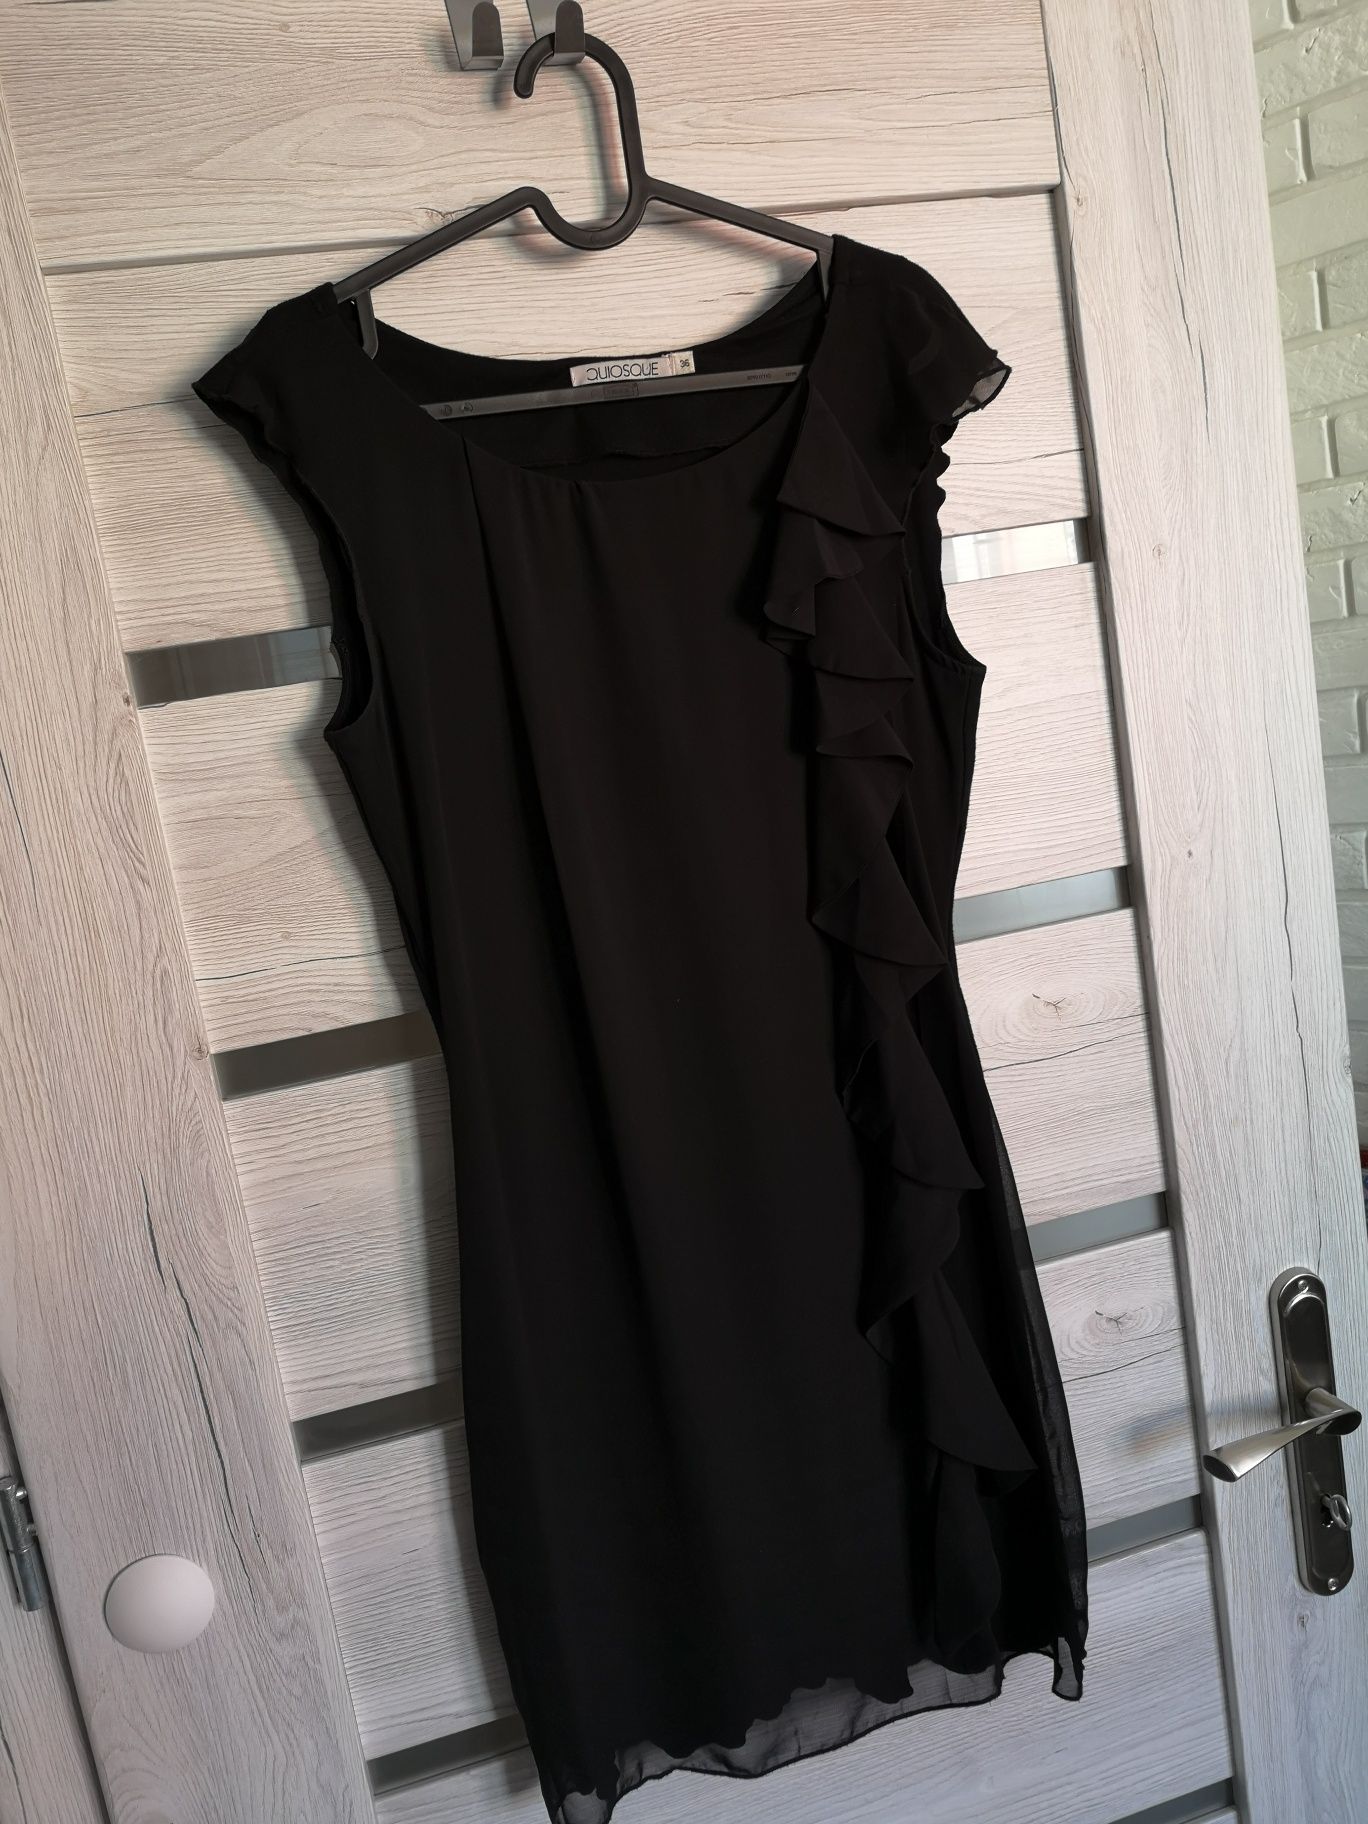 Quiosque mała czarna sukienka koktajlowa wesele sylwester